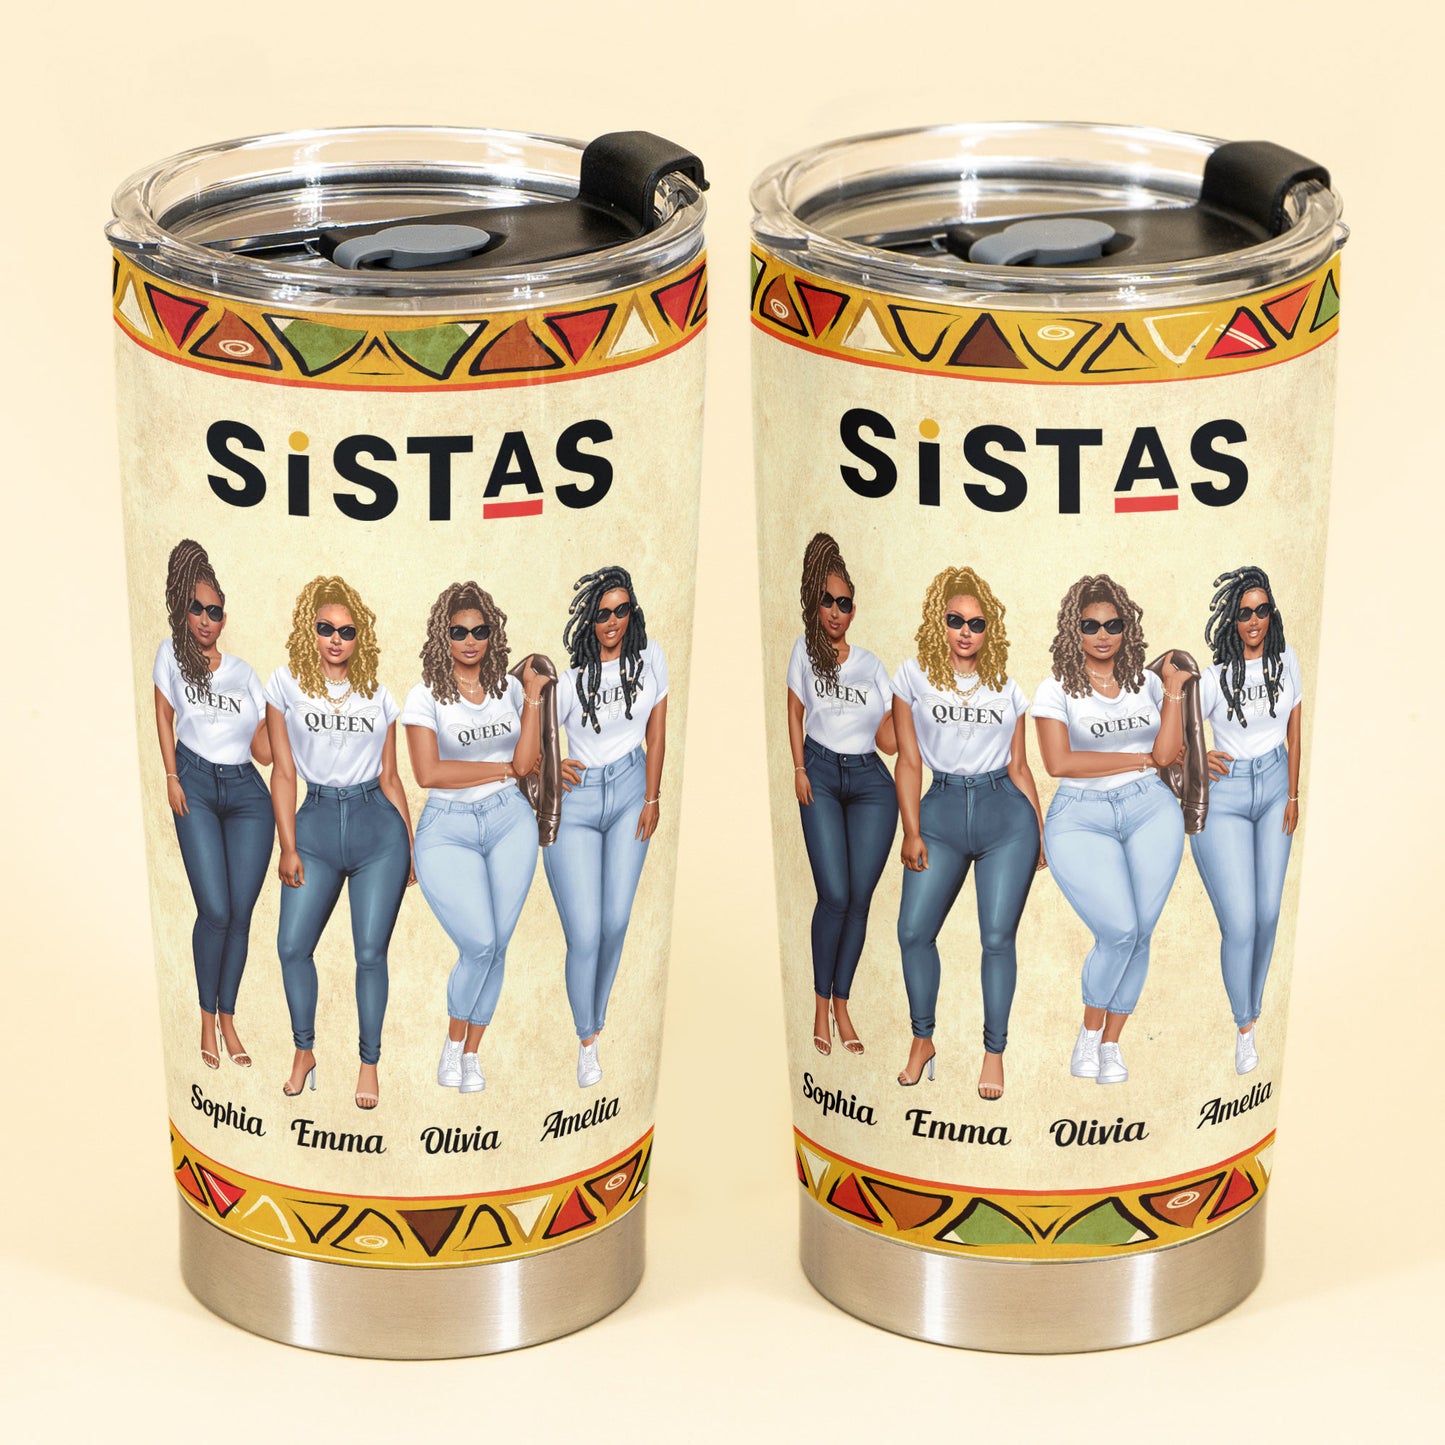 Sistas Forever - Personalized Tumbler - Birthday Gift For Sistas, BFF, Black Woman